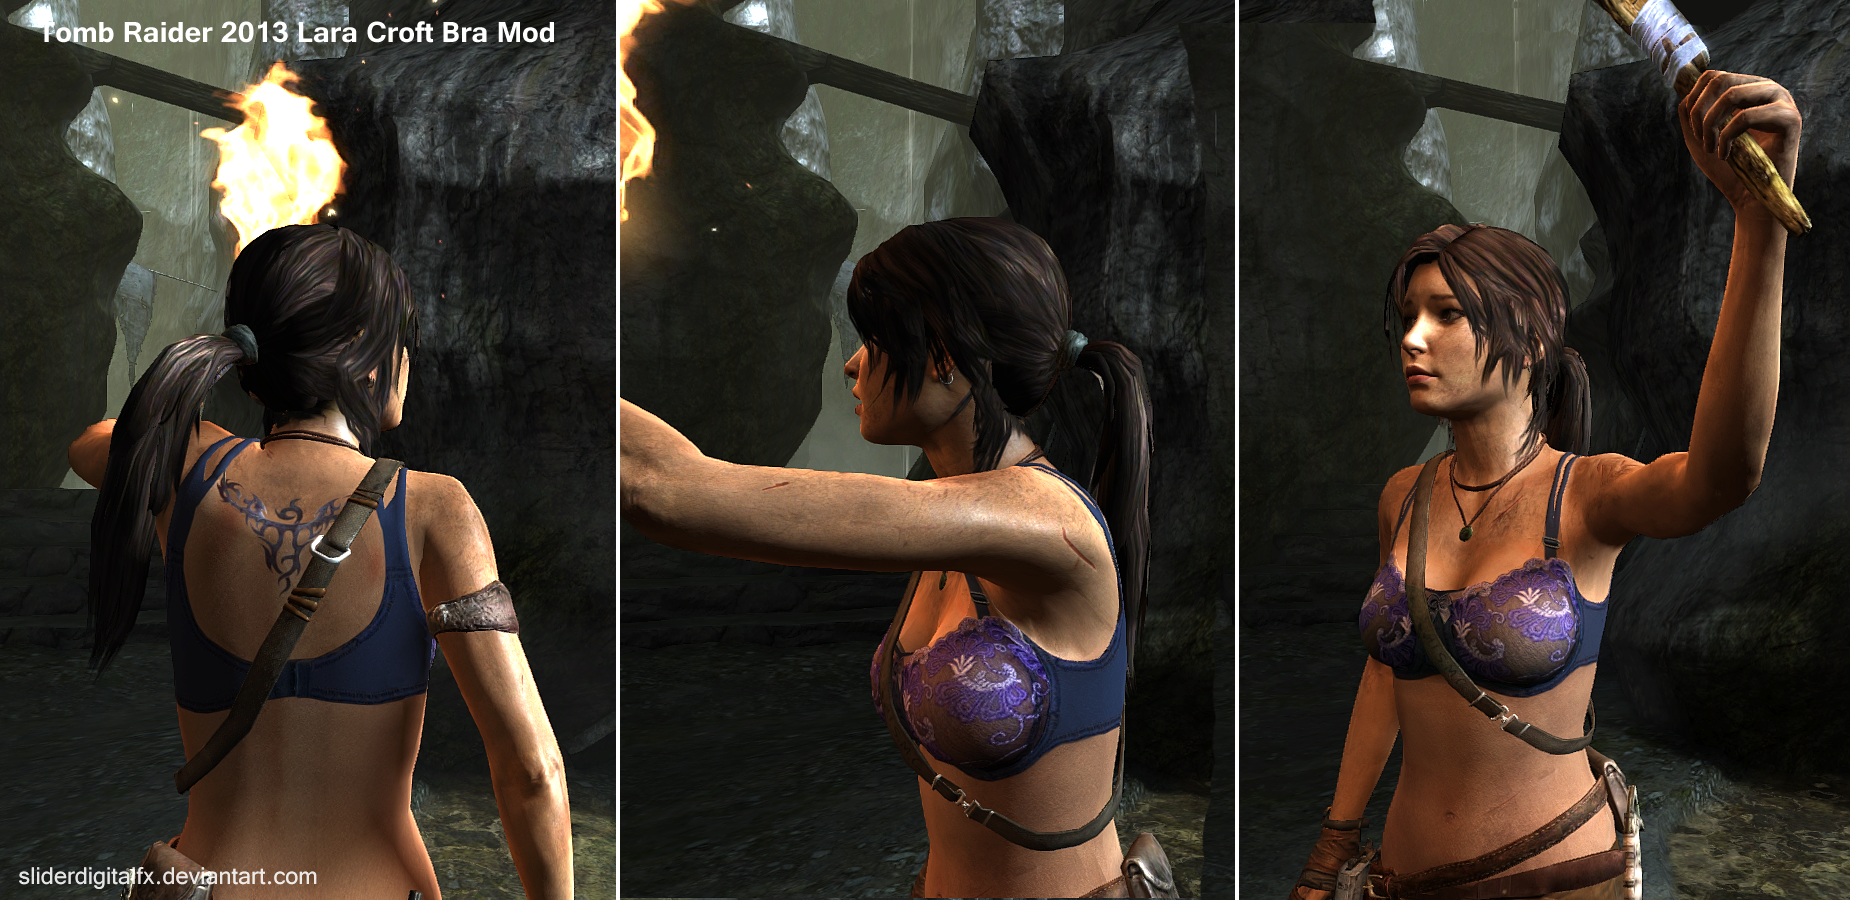 Tomb Raider 2013 Lara Croft Bra Mod By Sliderdigitalfx On